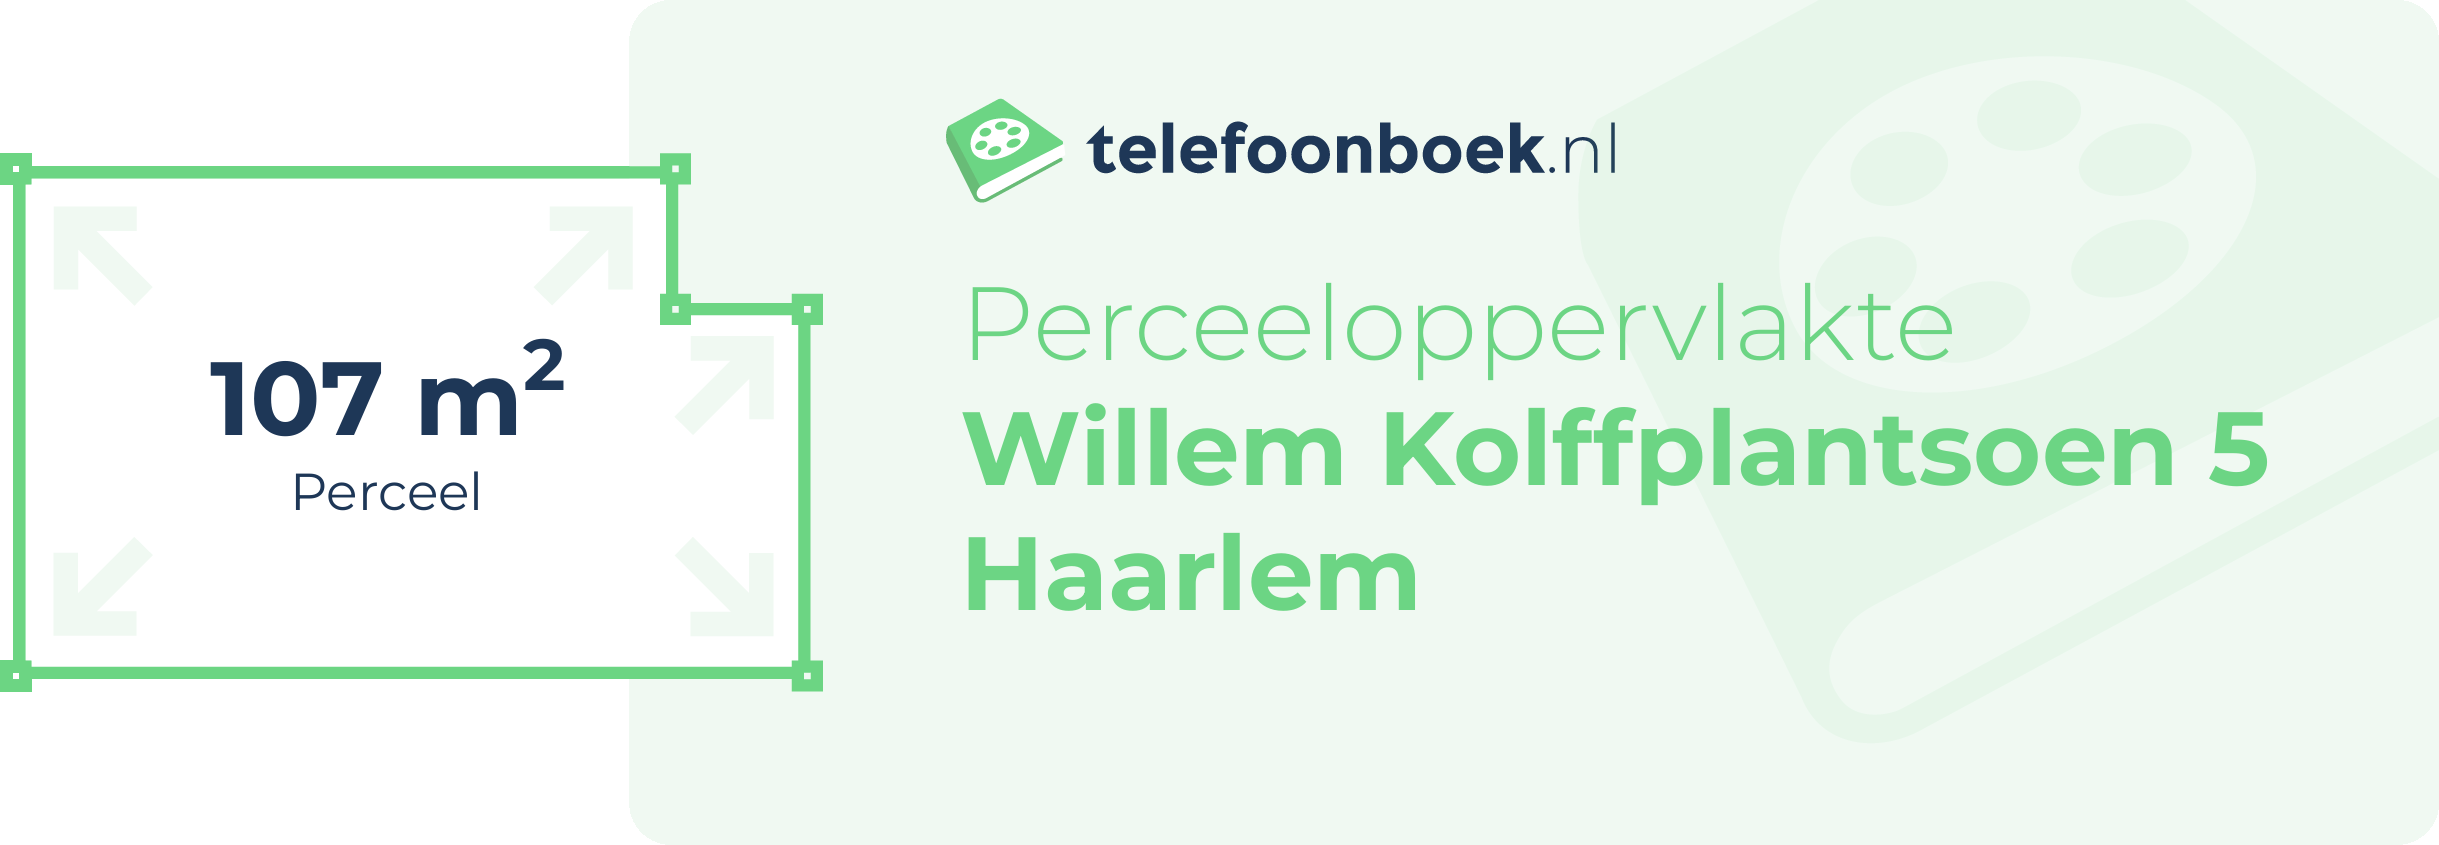 Perceeloppervlakte Willem Kolffplantsoen 5 Haarlem